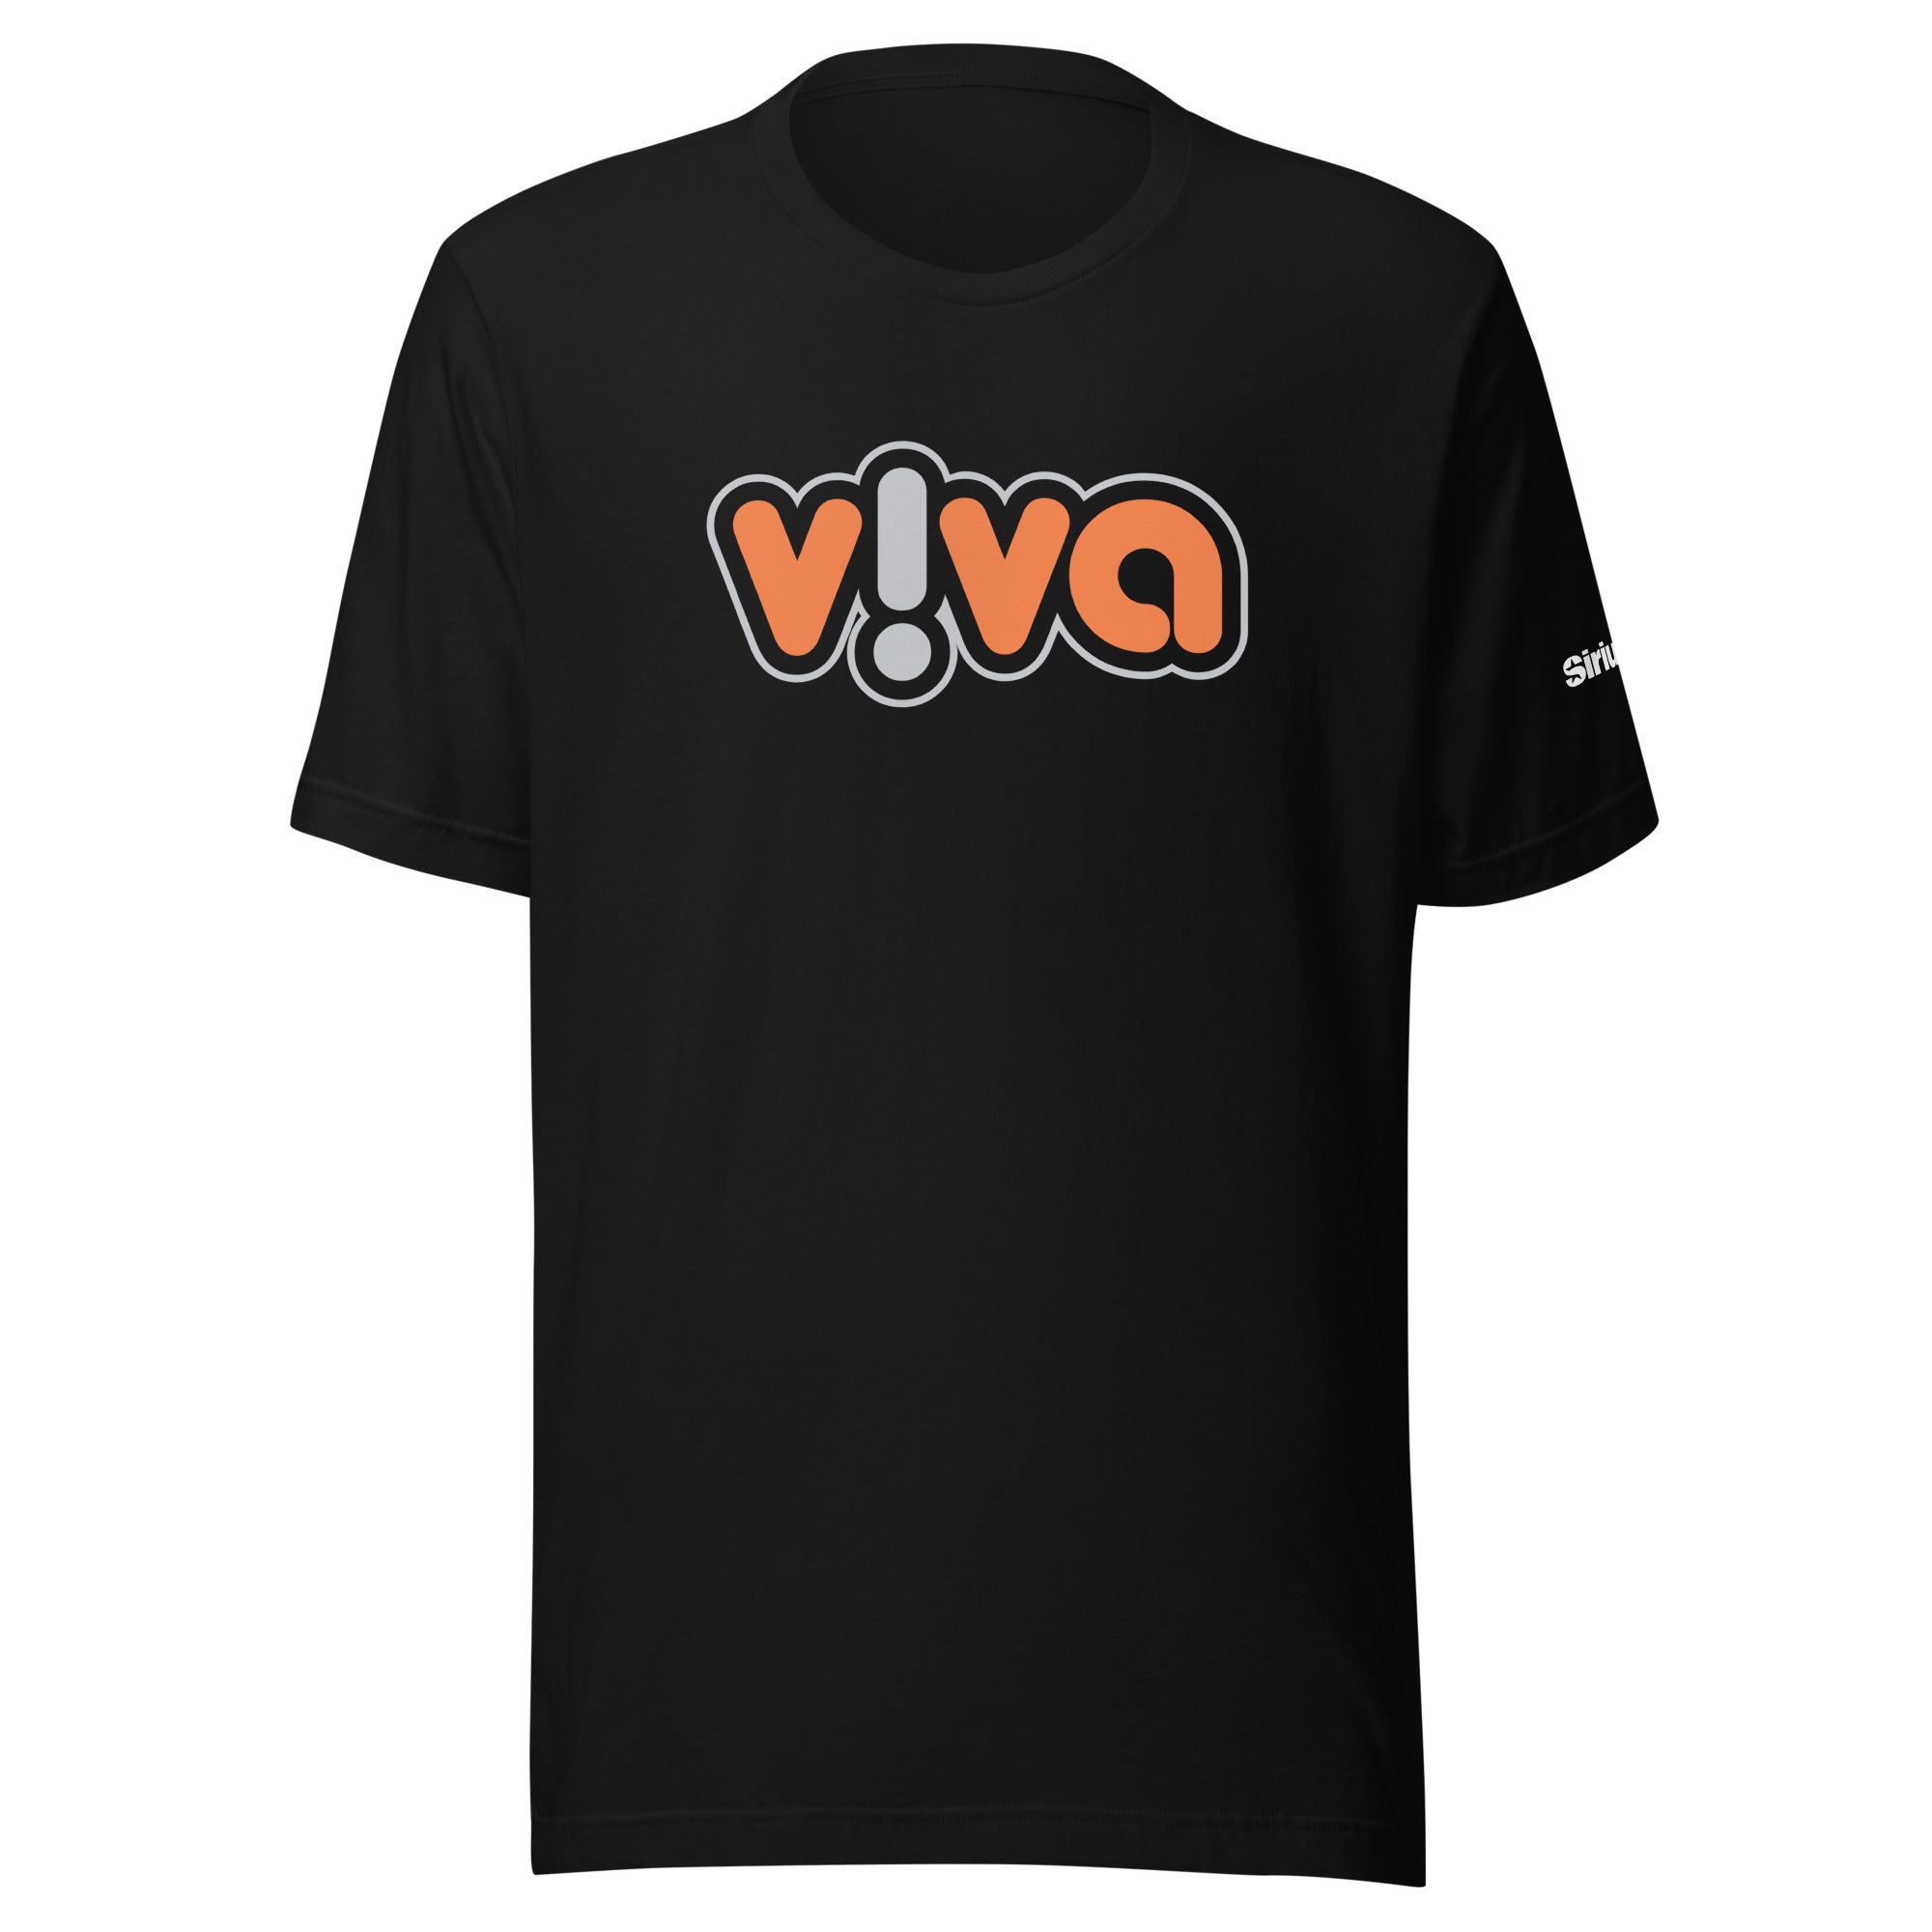 Viva: T-shirt (Black)